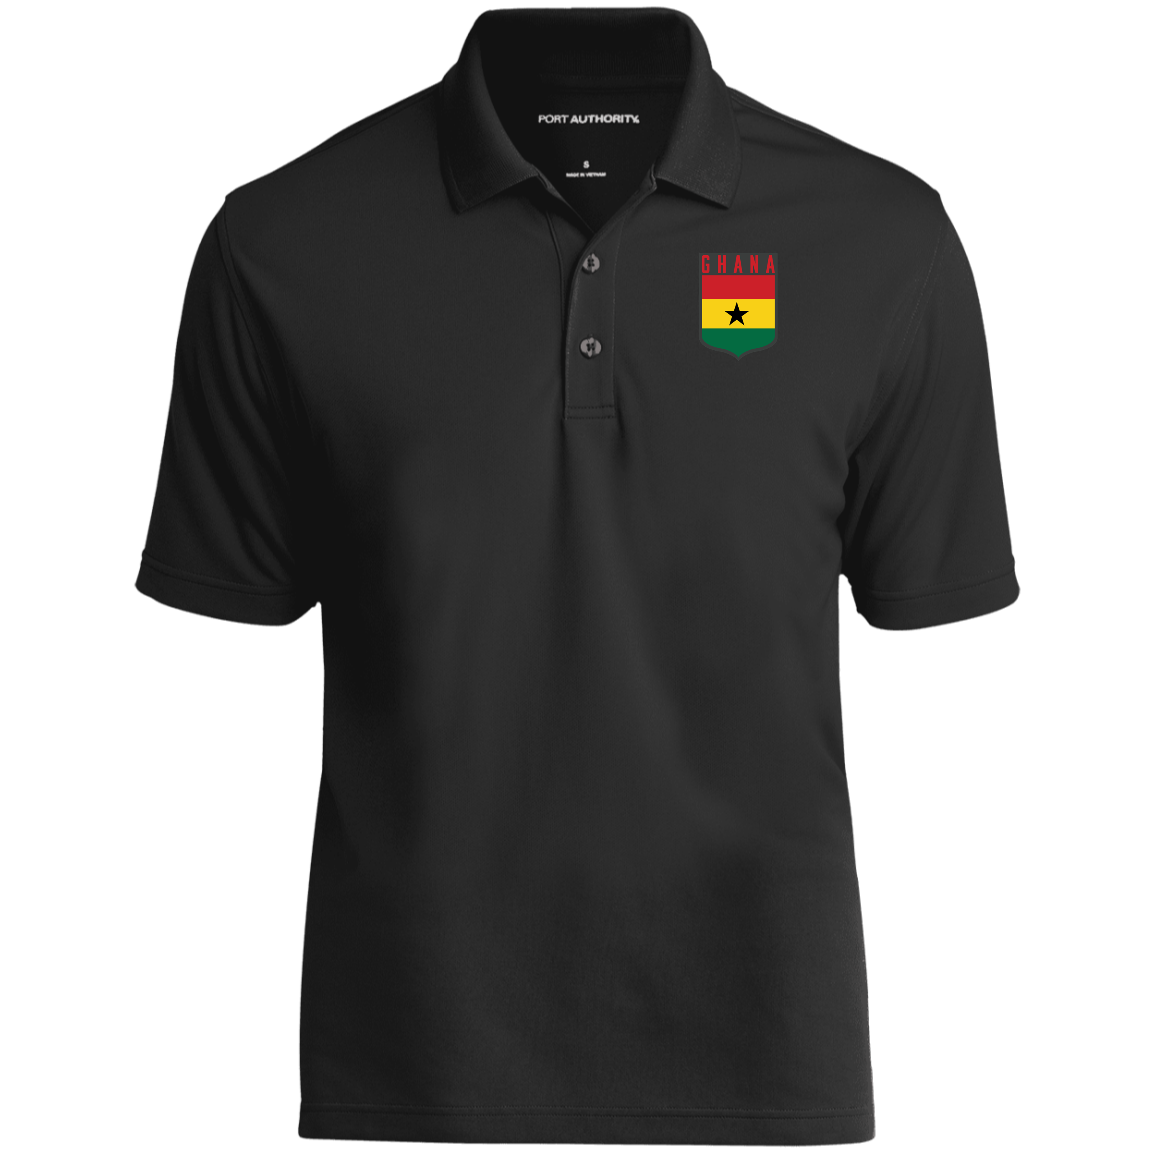 Ghana Football Team Emblem Men's Micro-mesh Polo